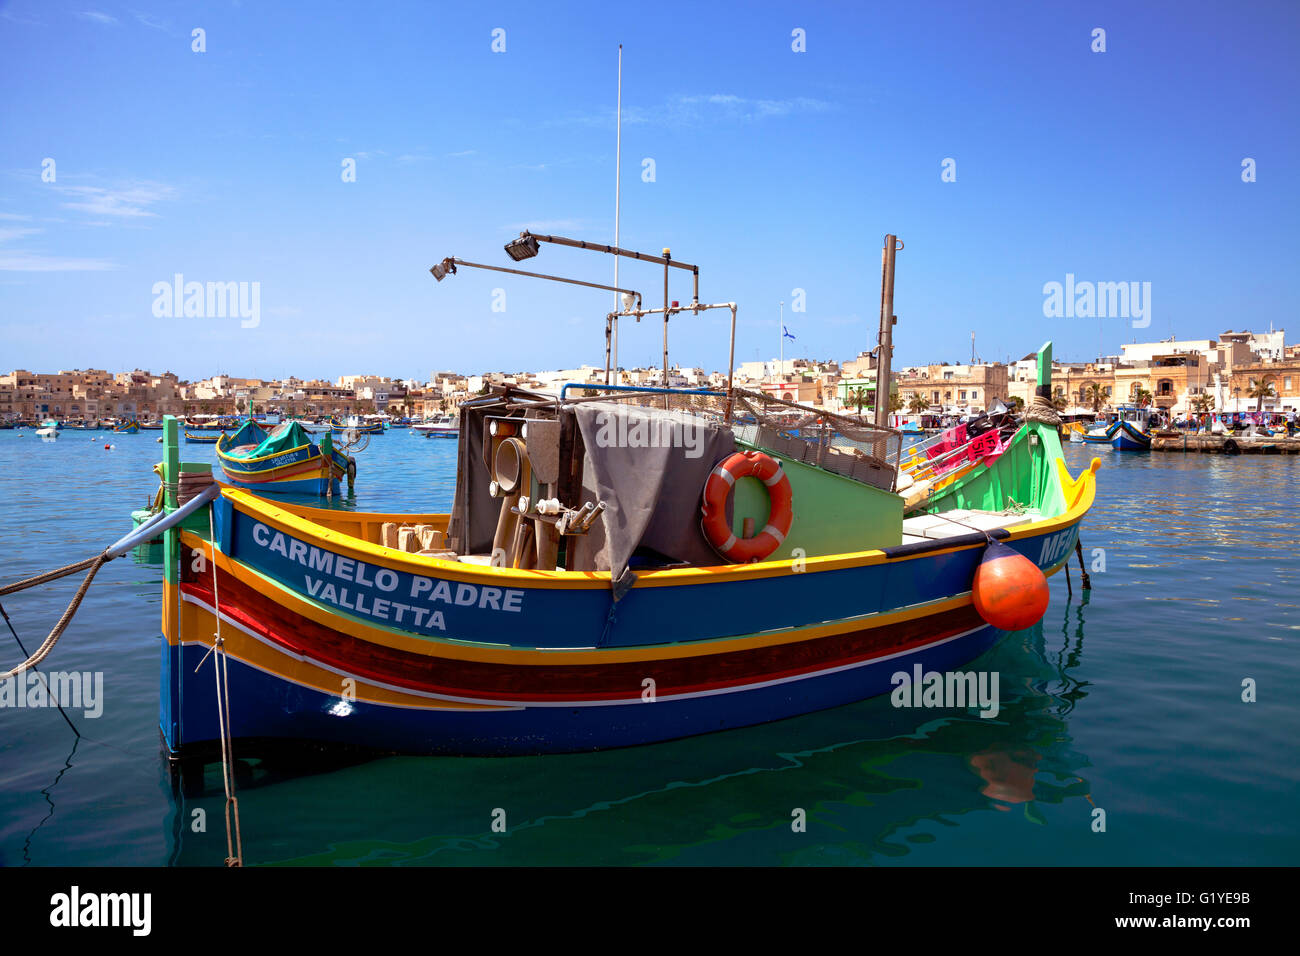 Luzzu, typical colorful fishing boat, port of Marsaxlokk, Malta Stock Photo